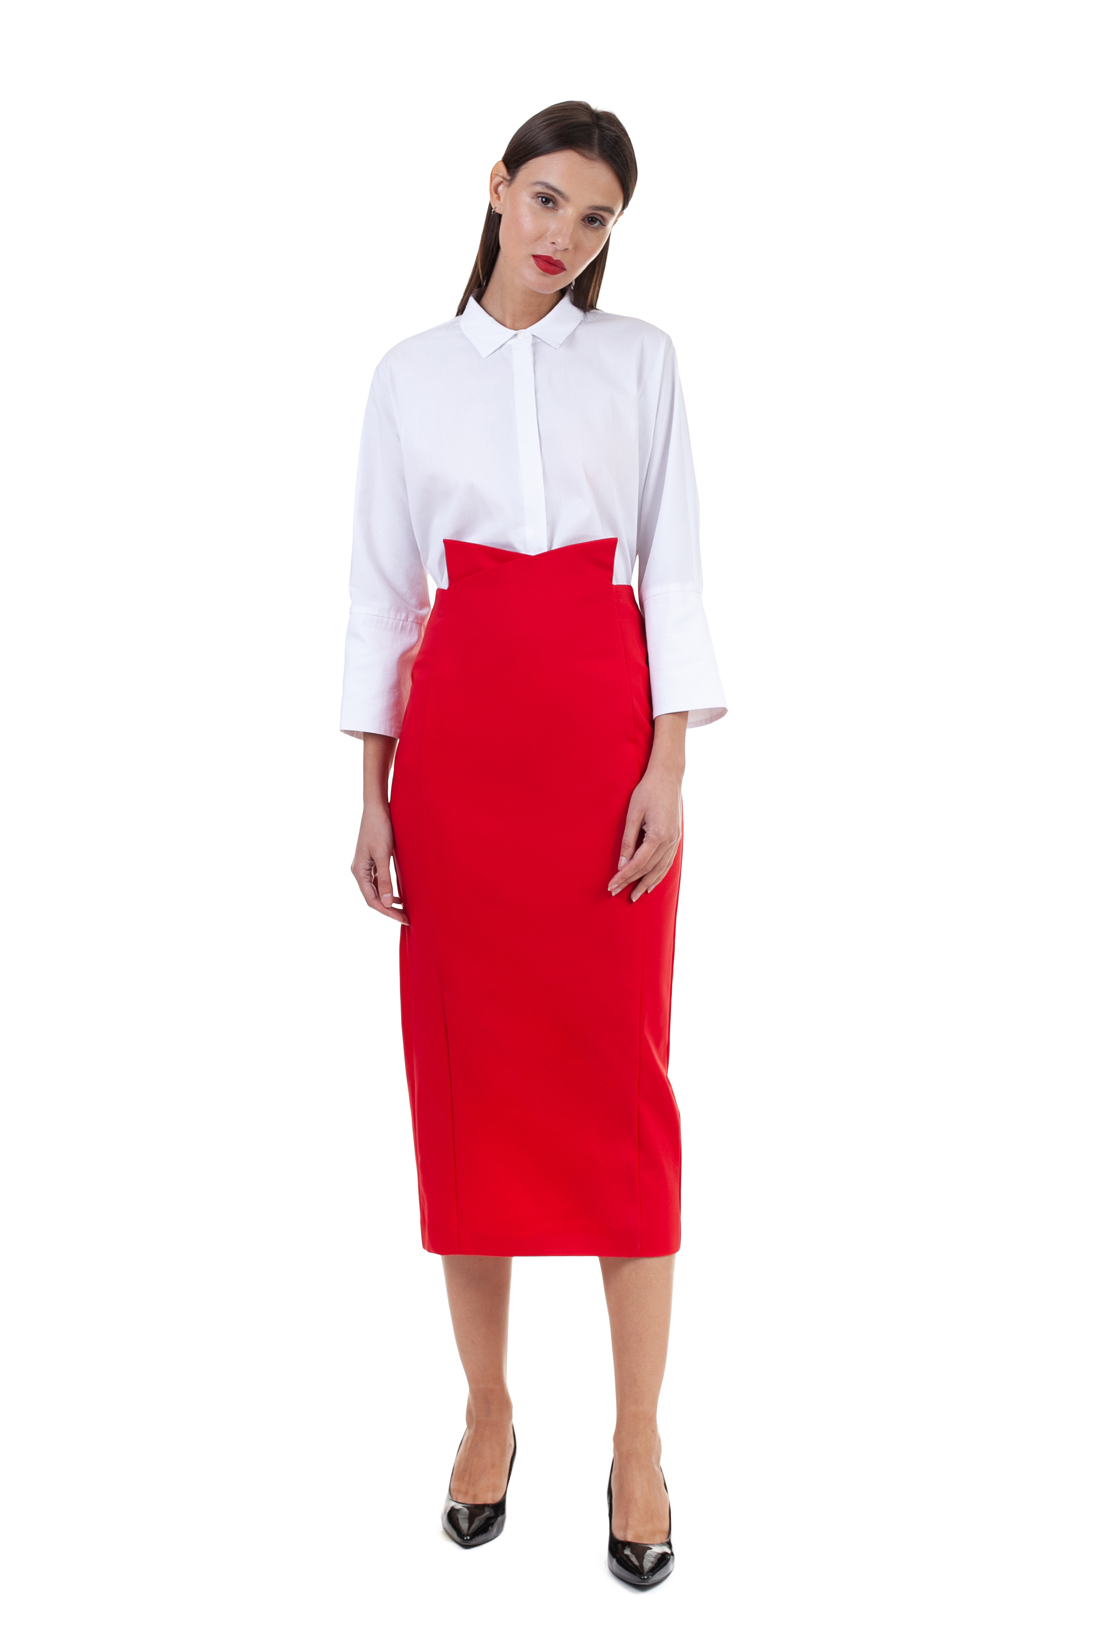 Красная юбка-миди (арт. baon B478038), размер XL, цвет красный Красная юбка-миди (арт. baon B478038) - фото 4